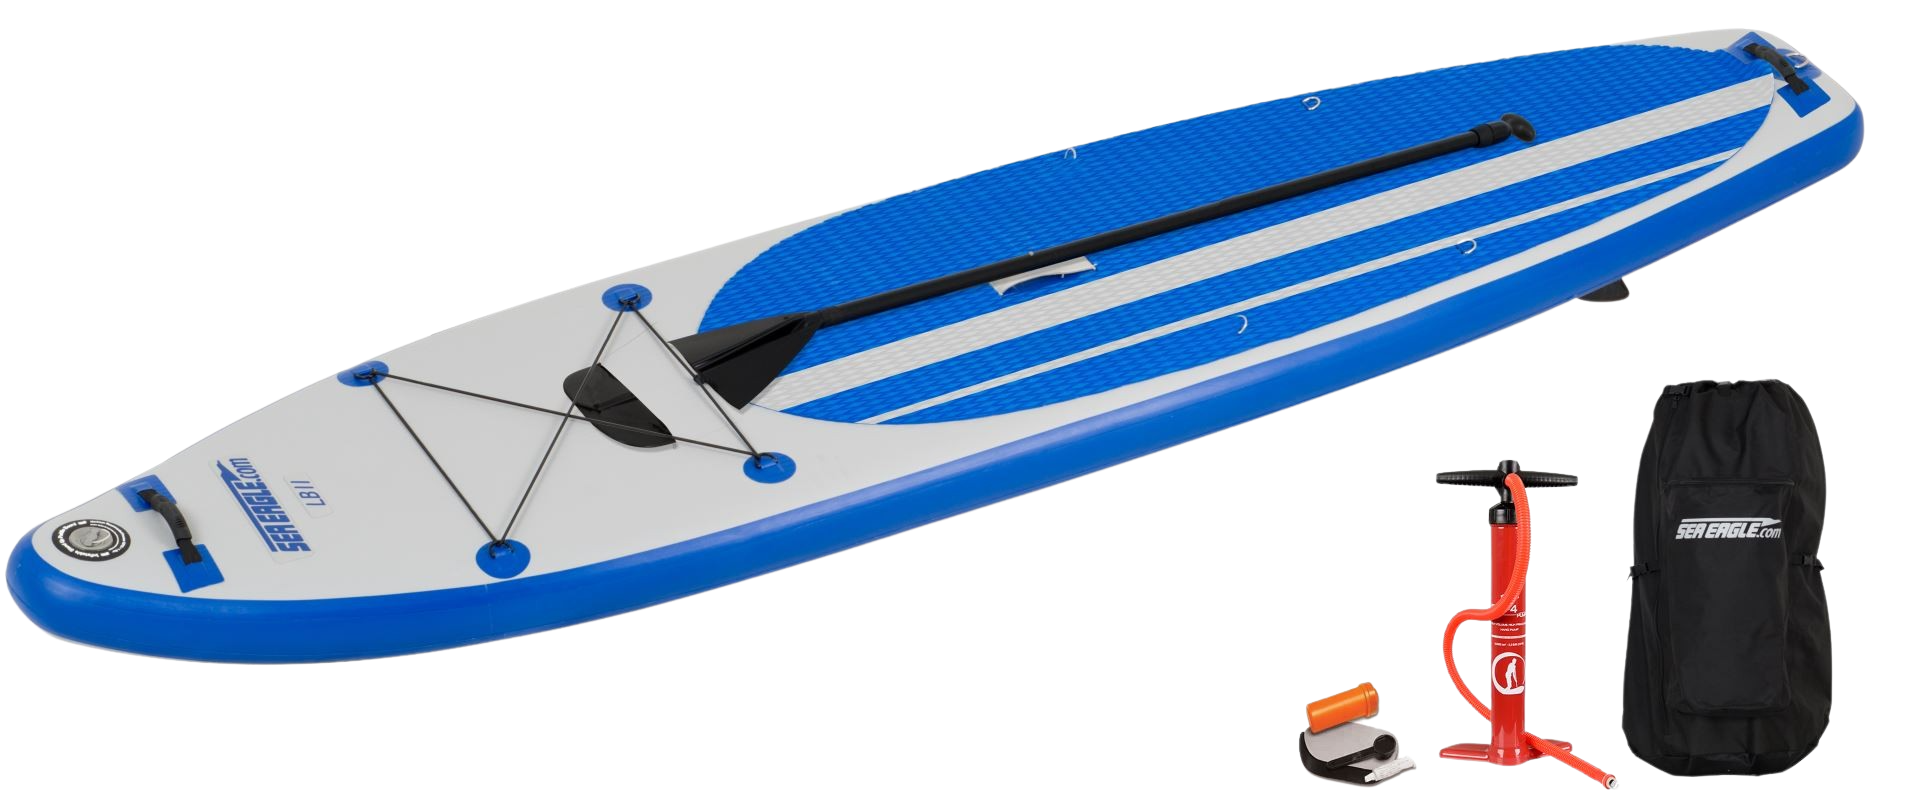 Sea Eagle, Sea Eagle LB11K_ST LongBoard 11 Inflatable Board Start Up Package New